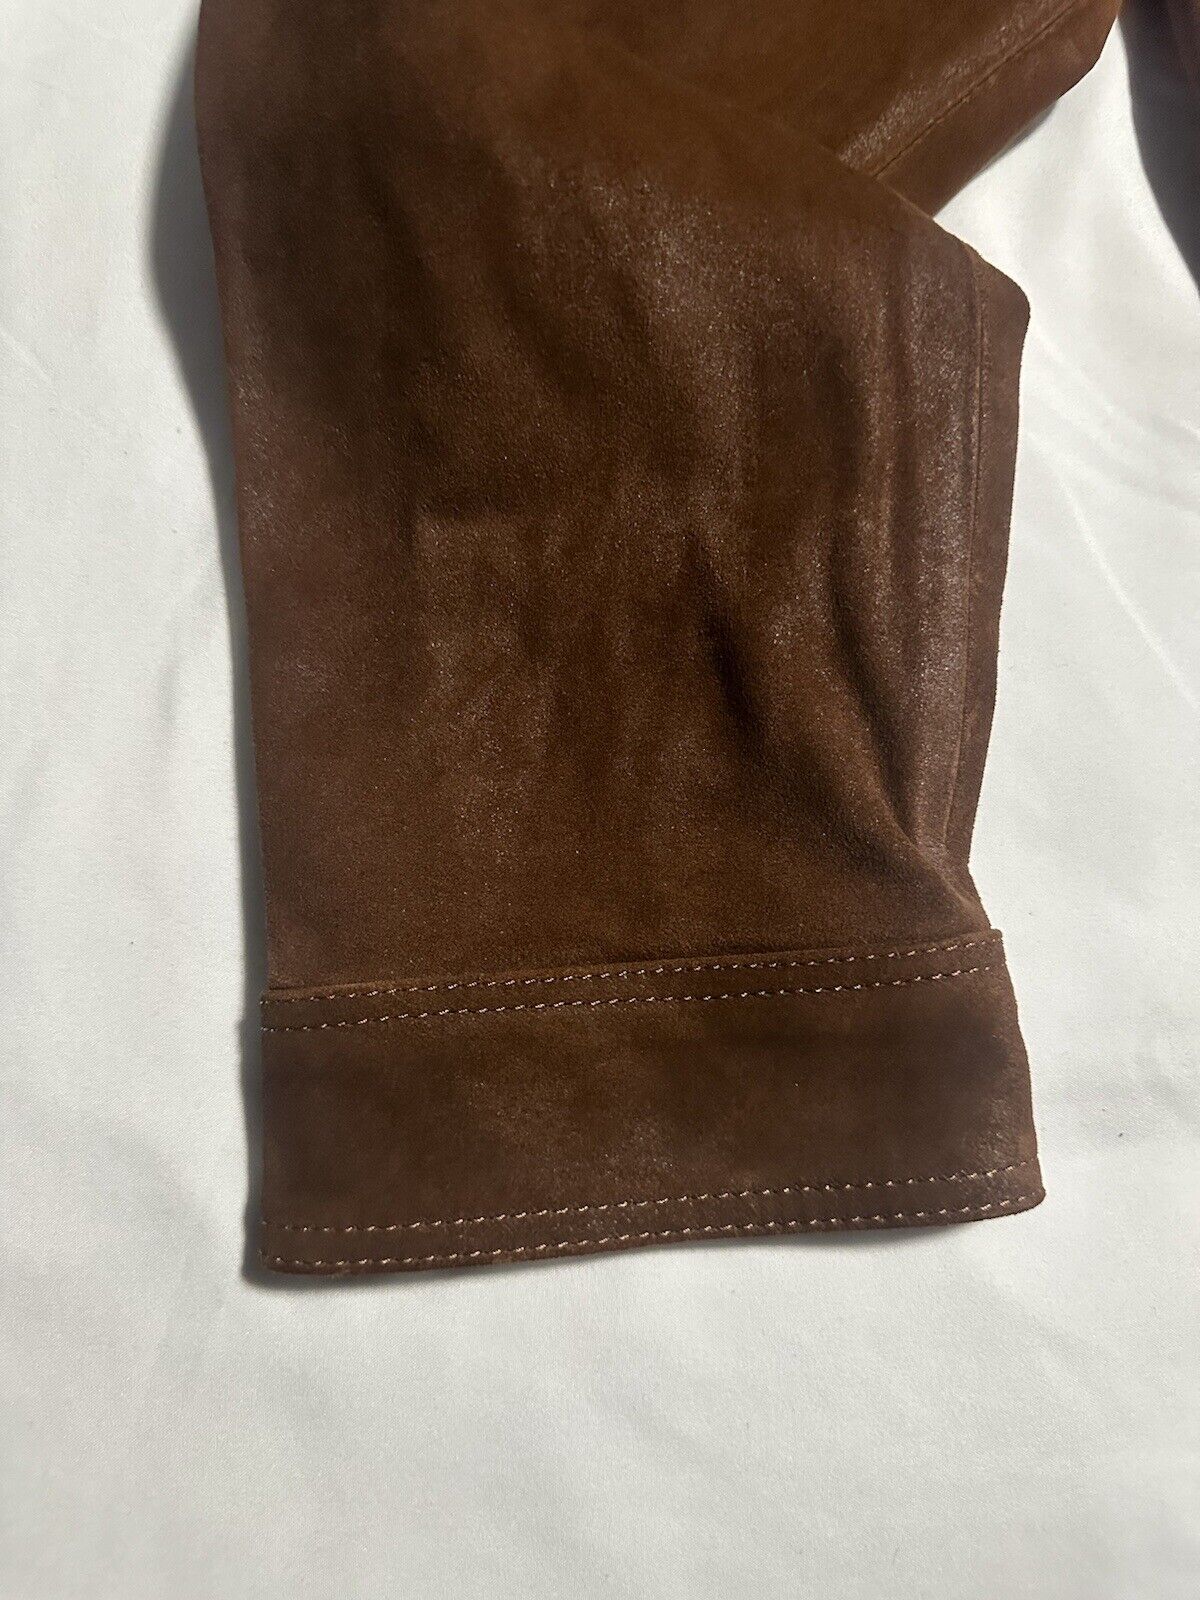 Satchel & Page Montgomery Leather Jacket - image 10